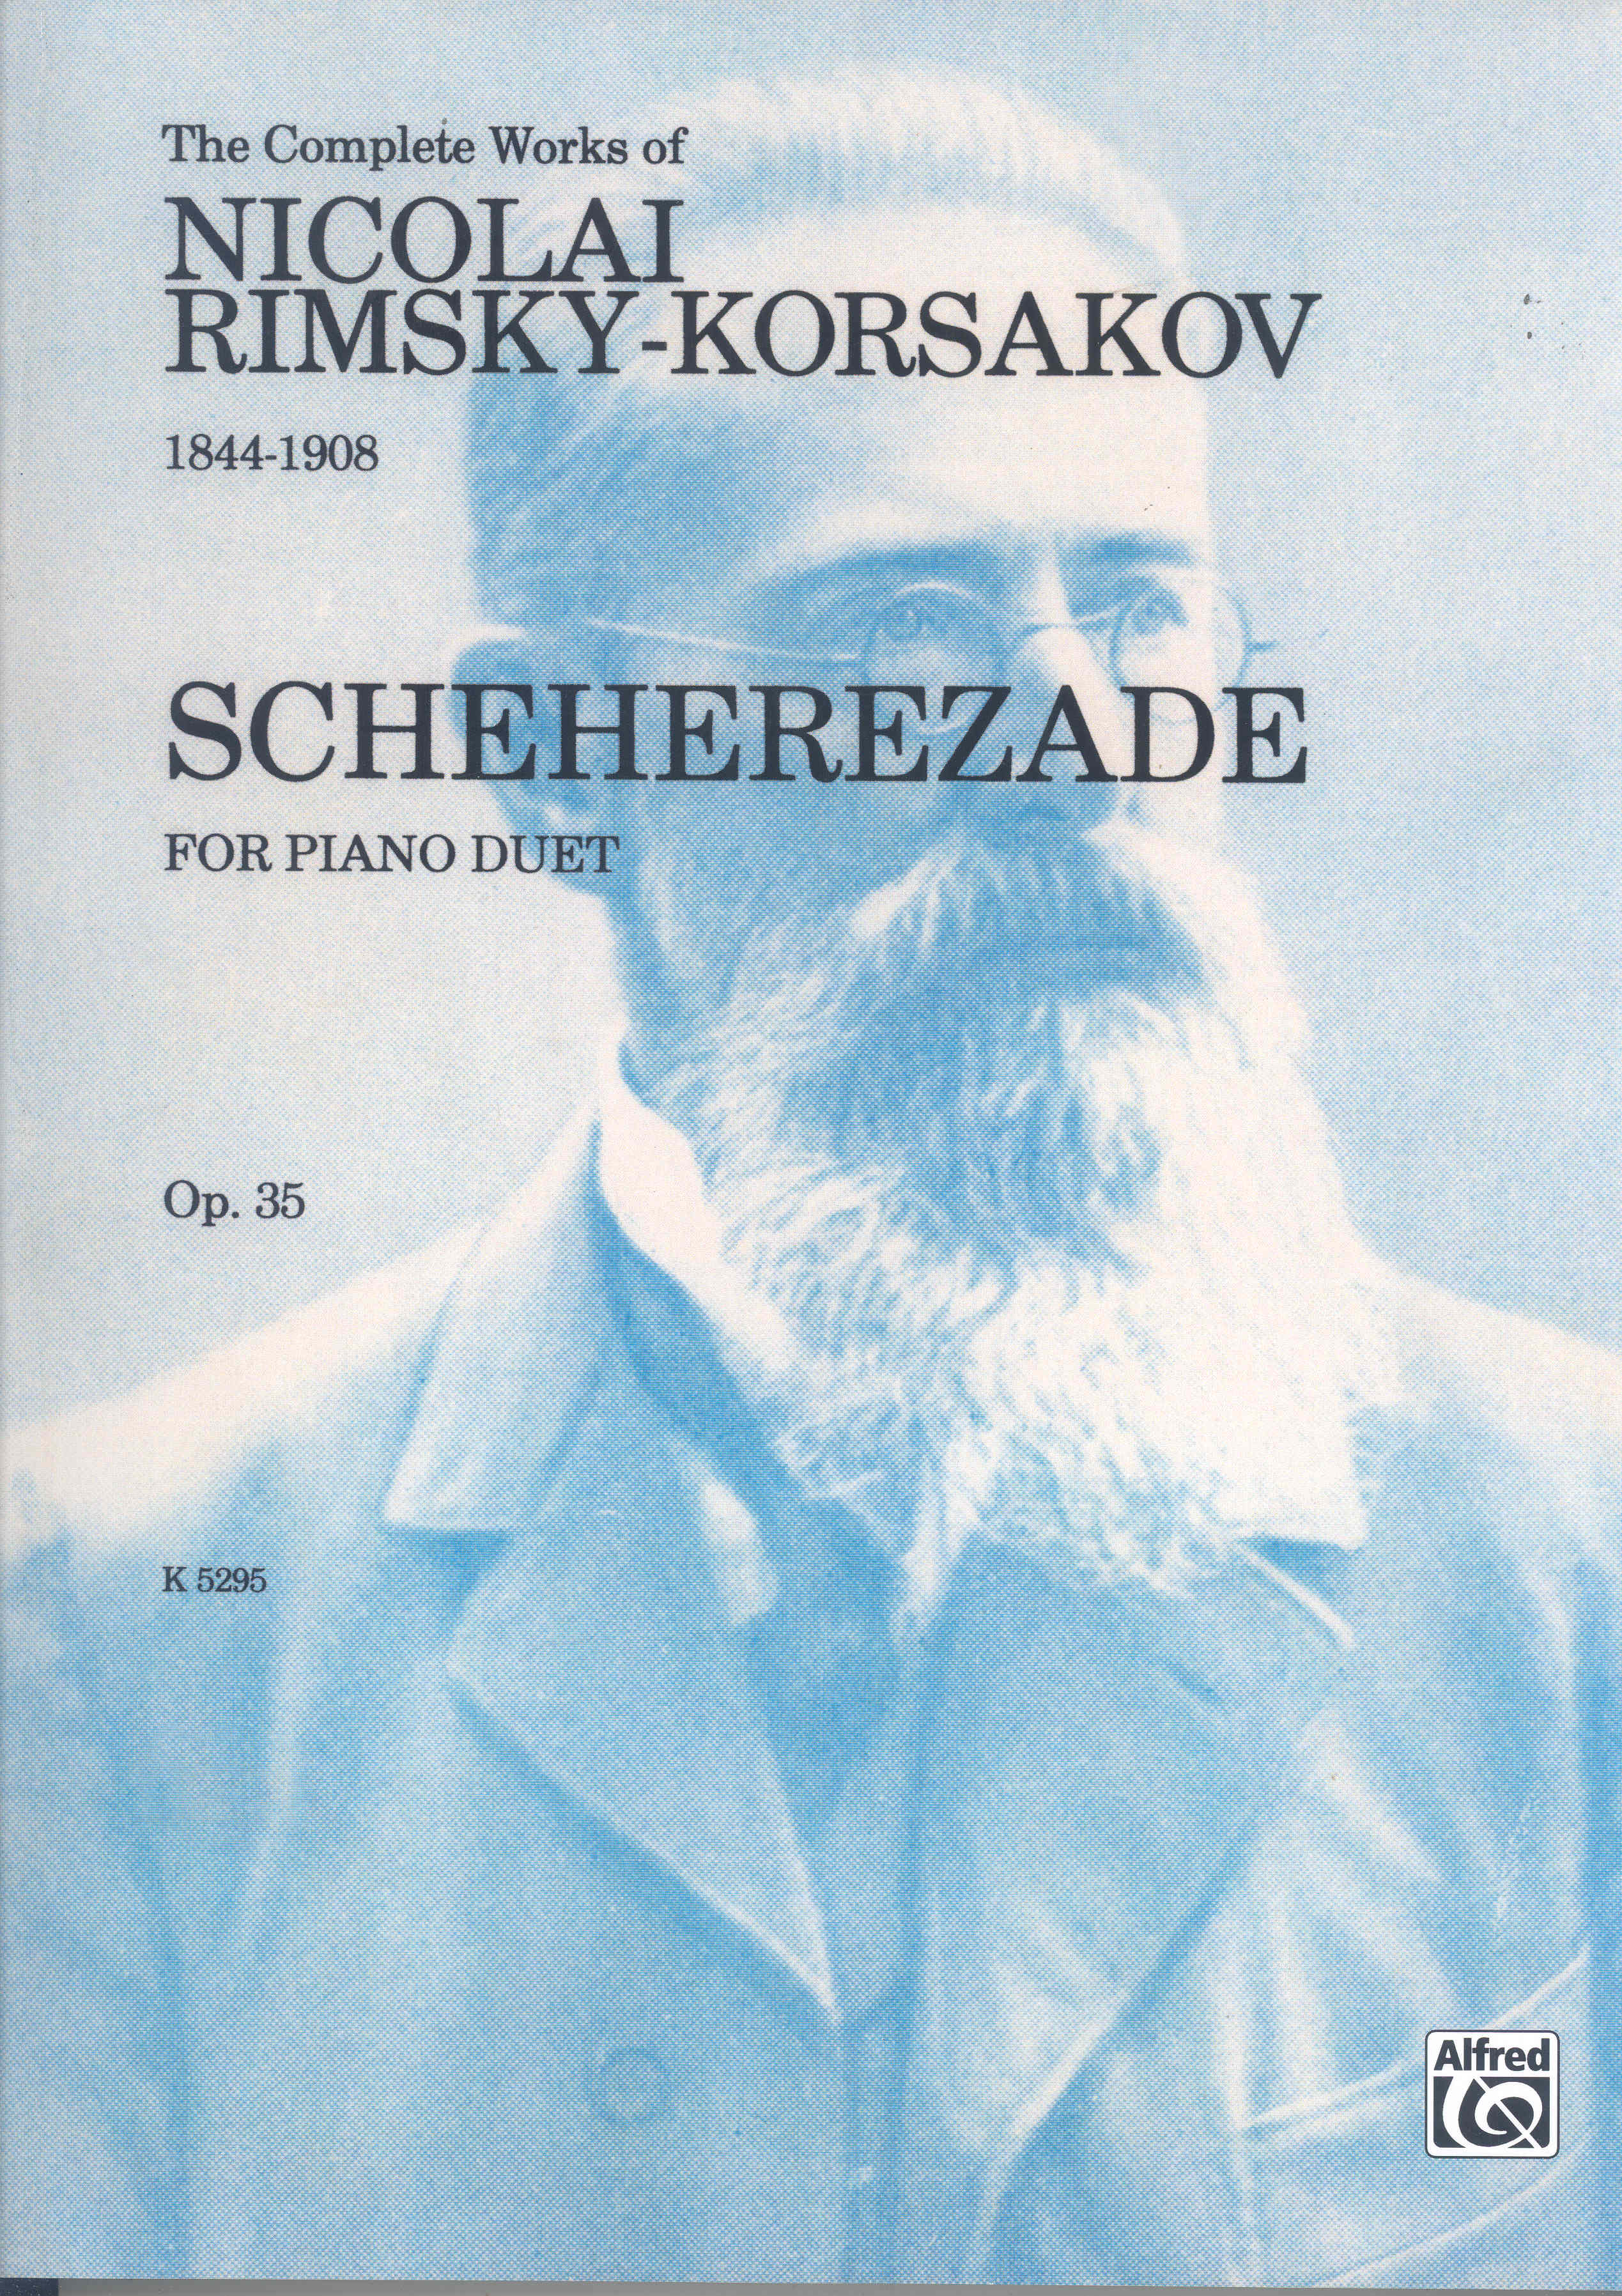 Rimsky-korsakov Scheherazade Piano Duet Sheet Music Songbook